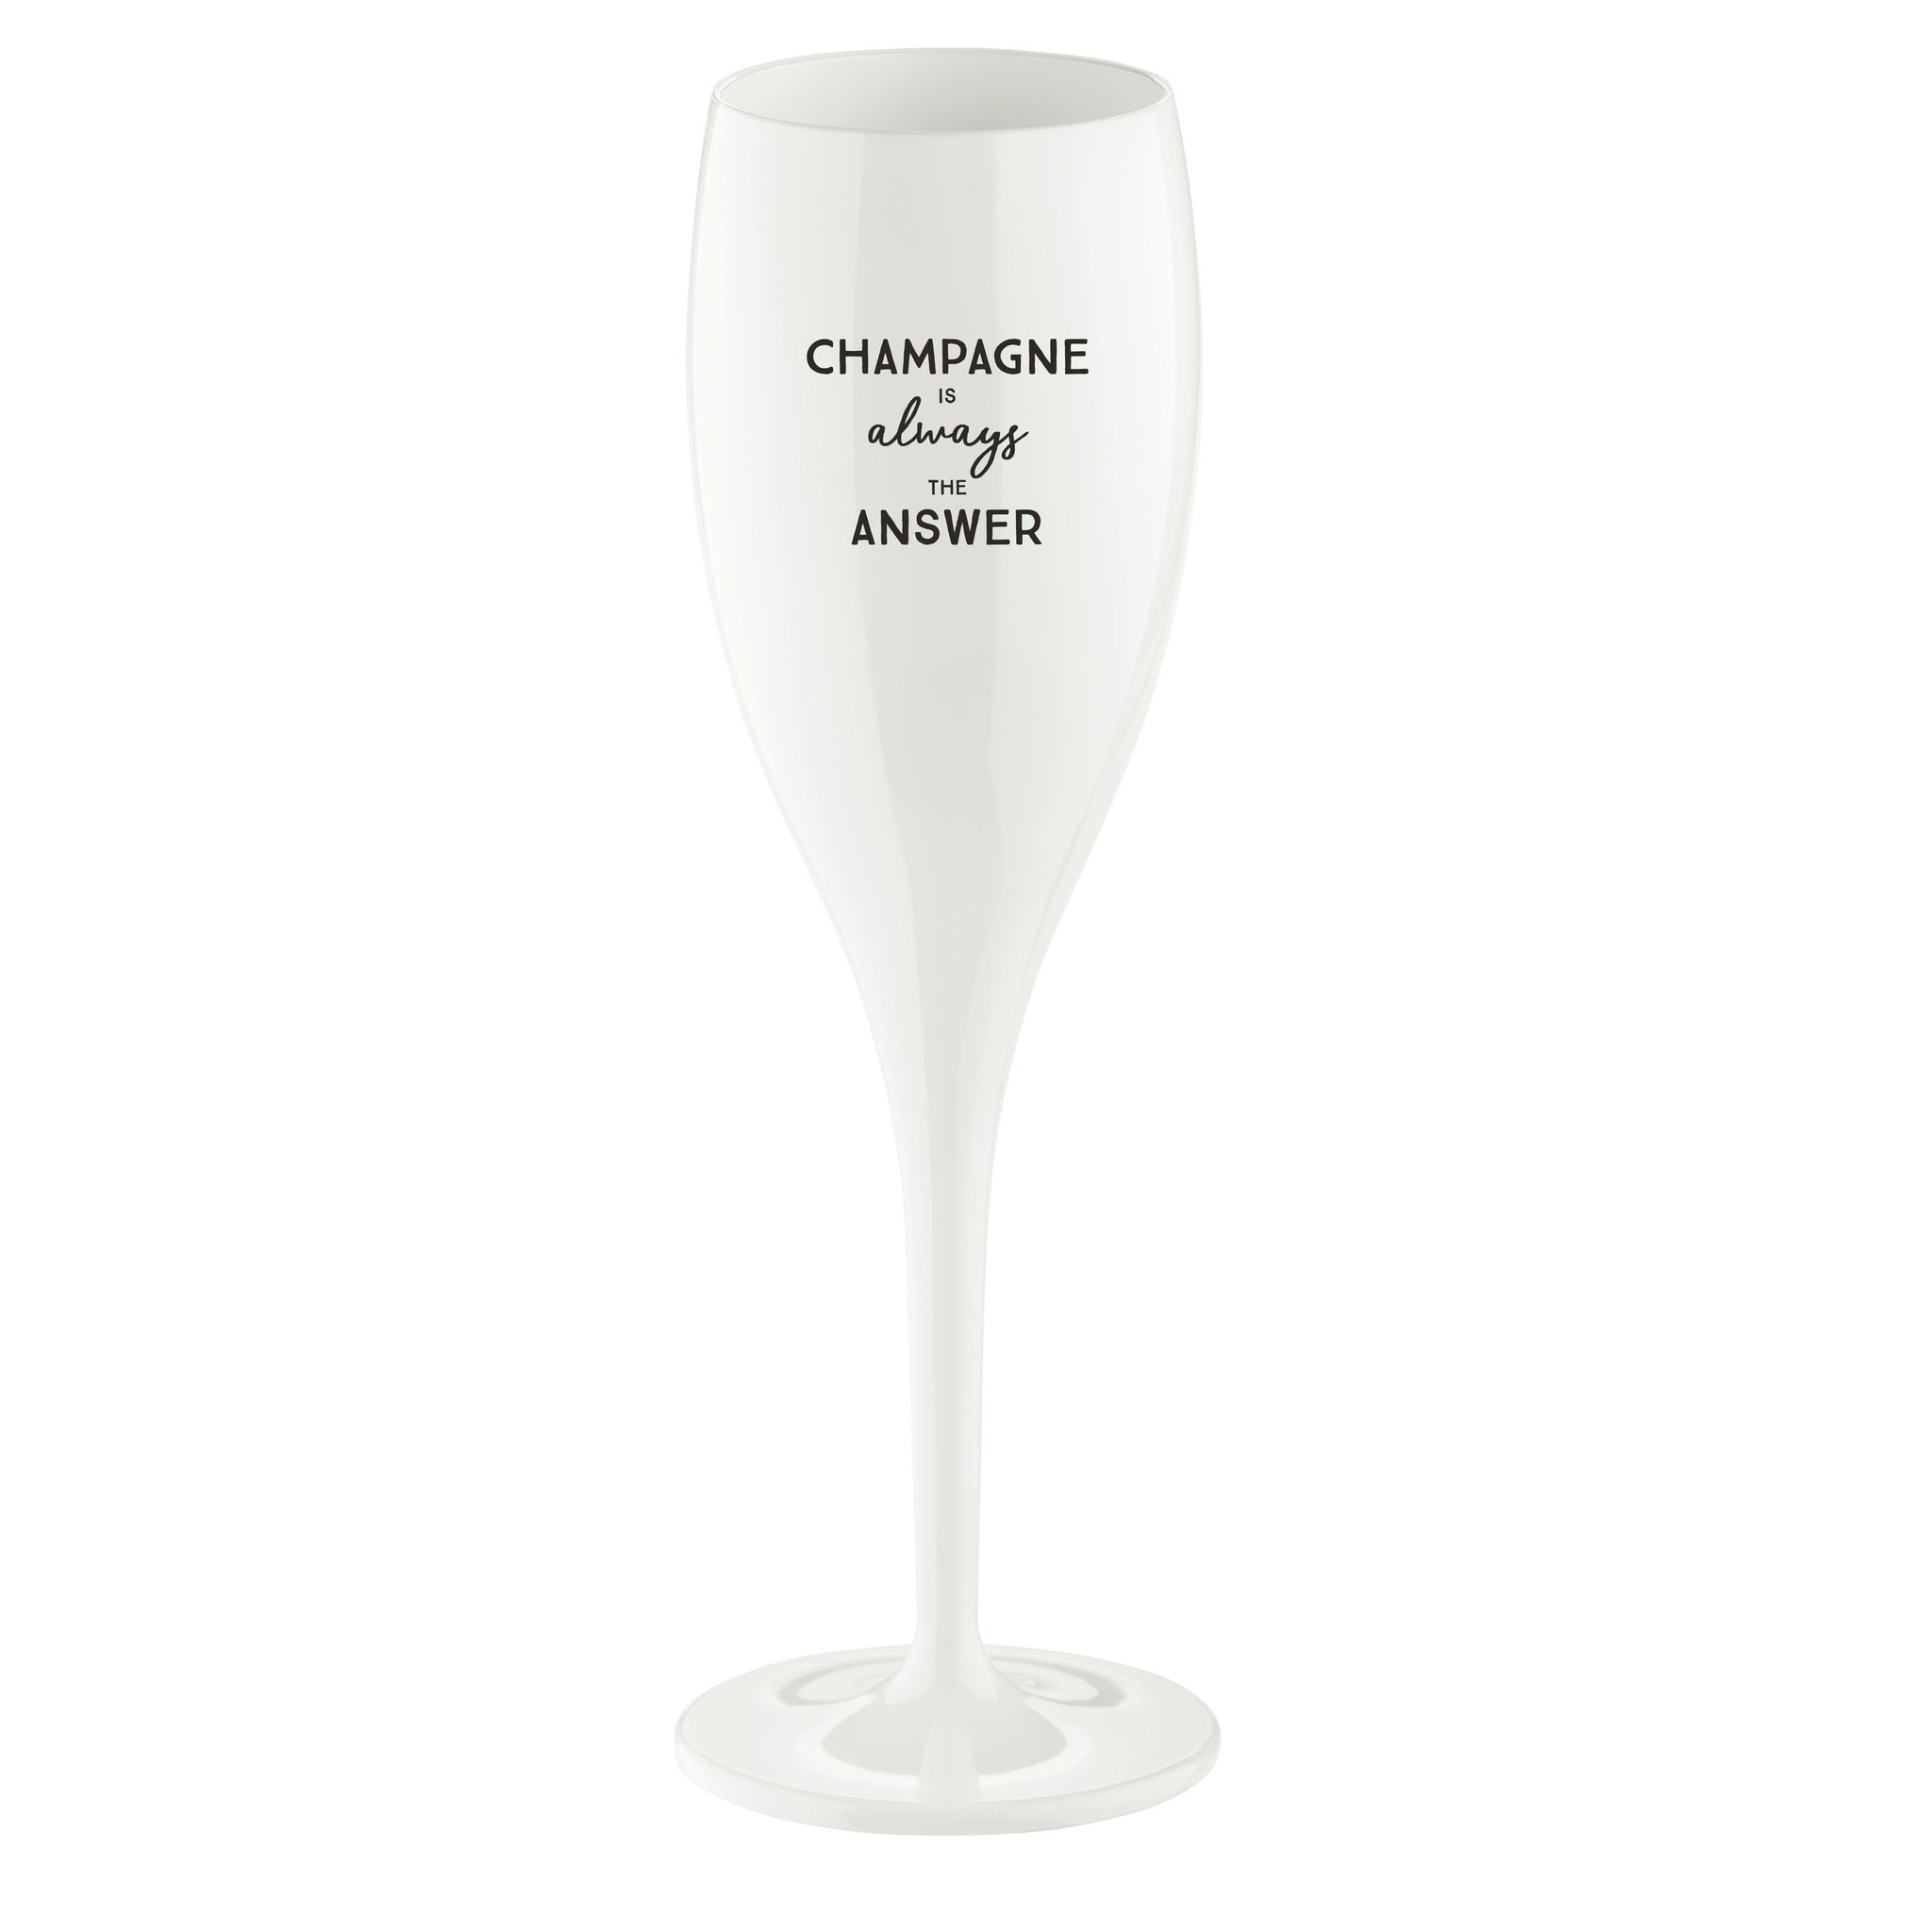 Koziol Superglas Cheers No. 1 Champagne Glas Champagne is the Answer